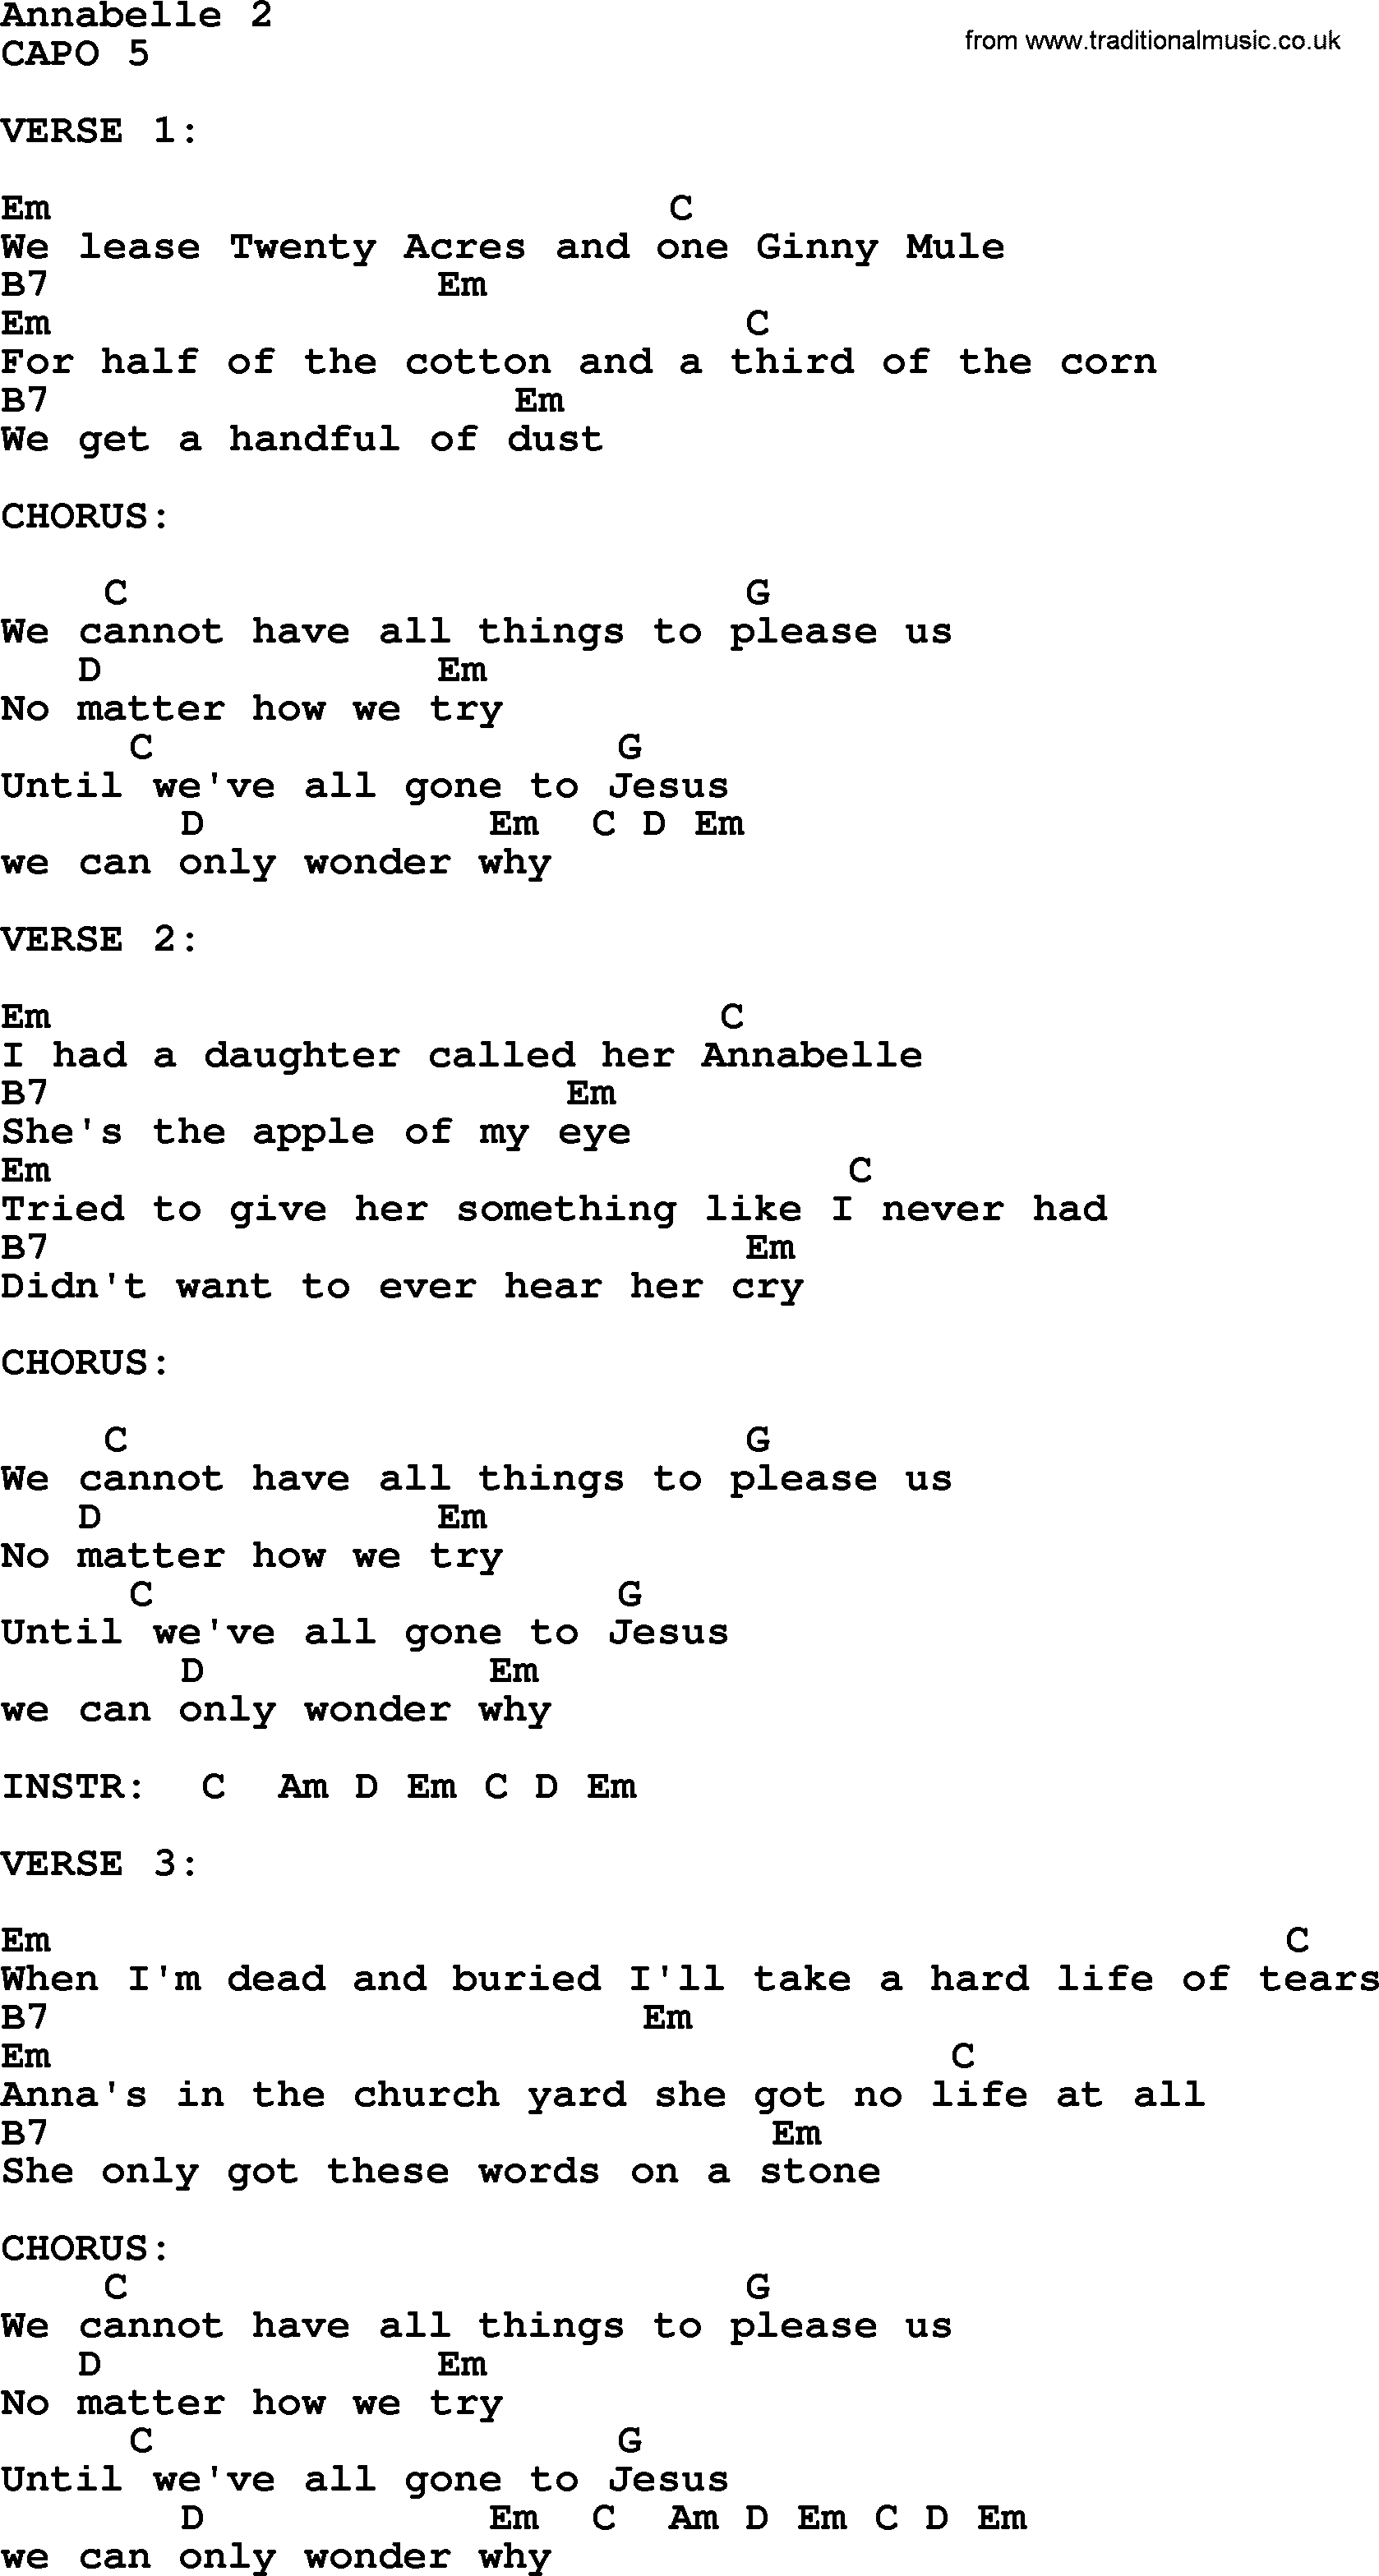 Bluegrass song: Annabelle 2, lyrics and chords